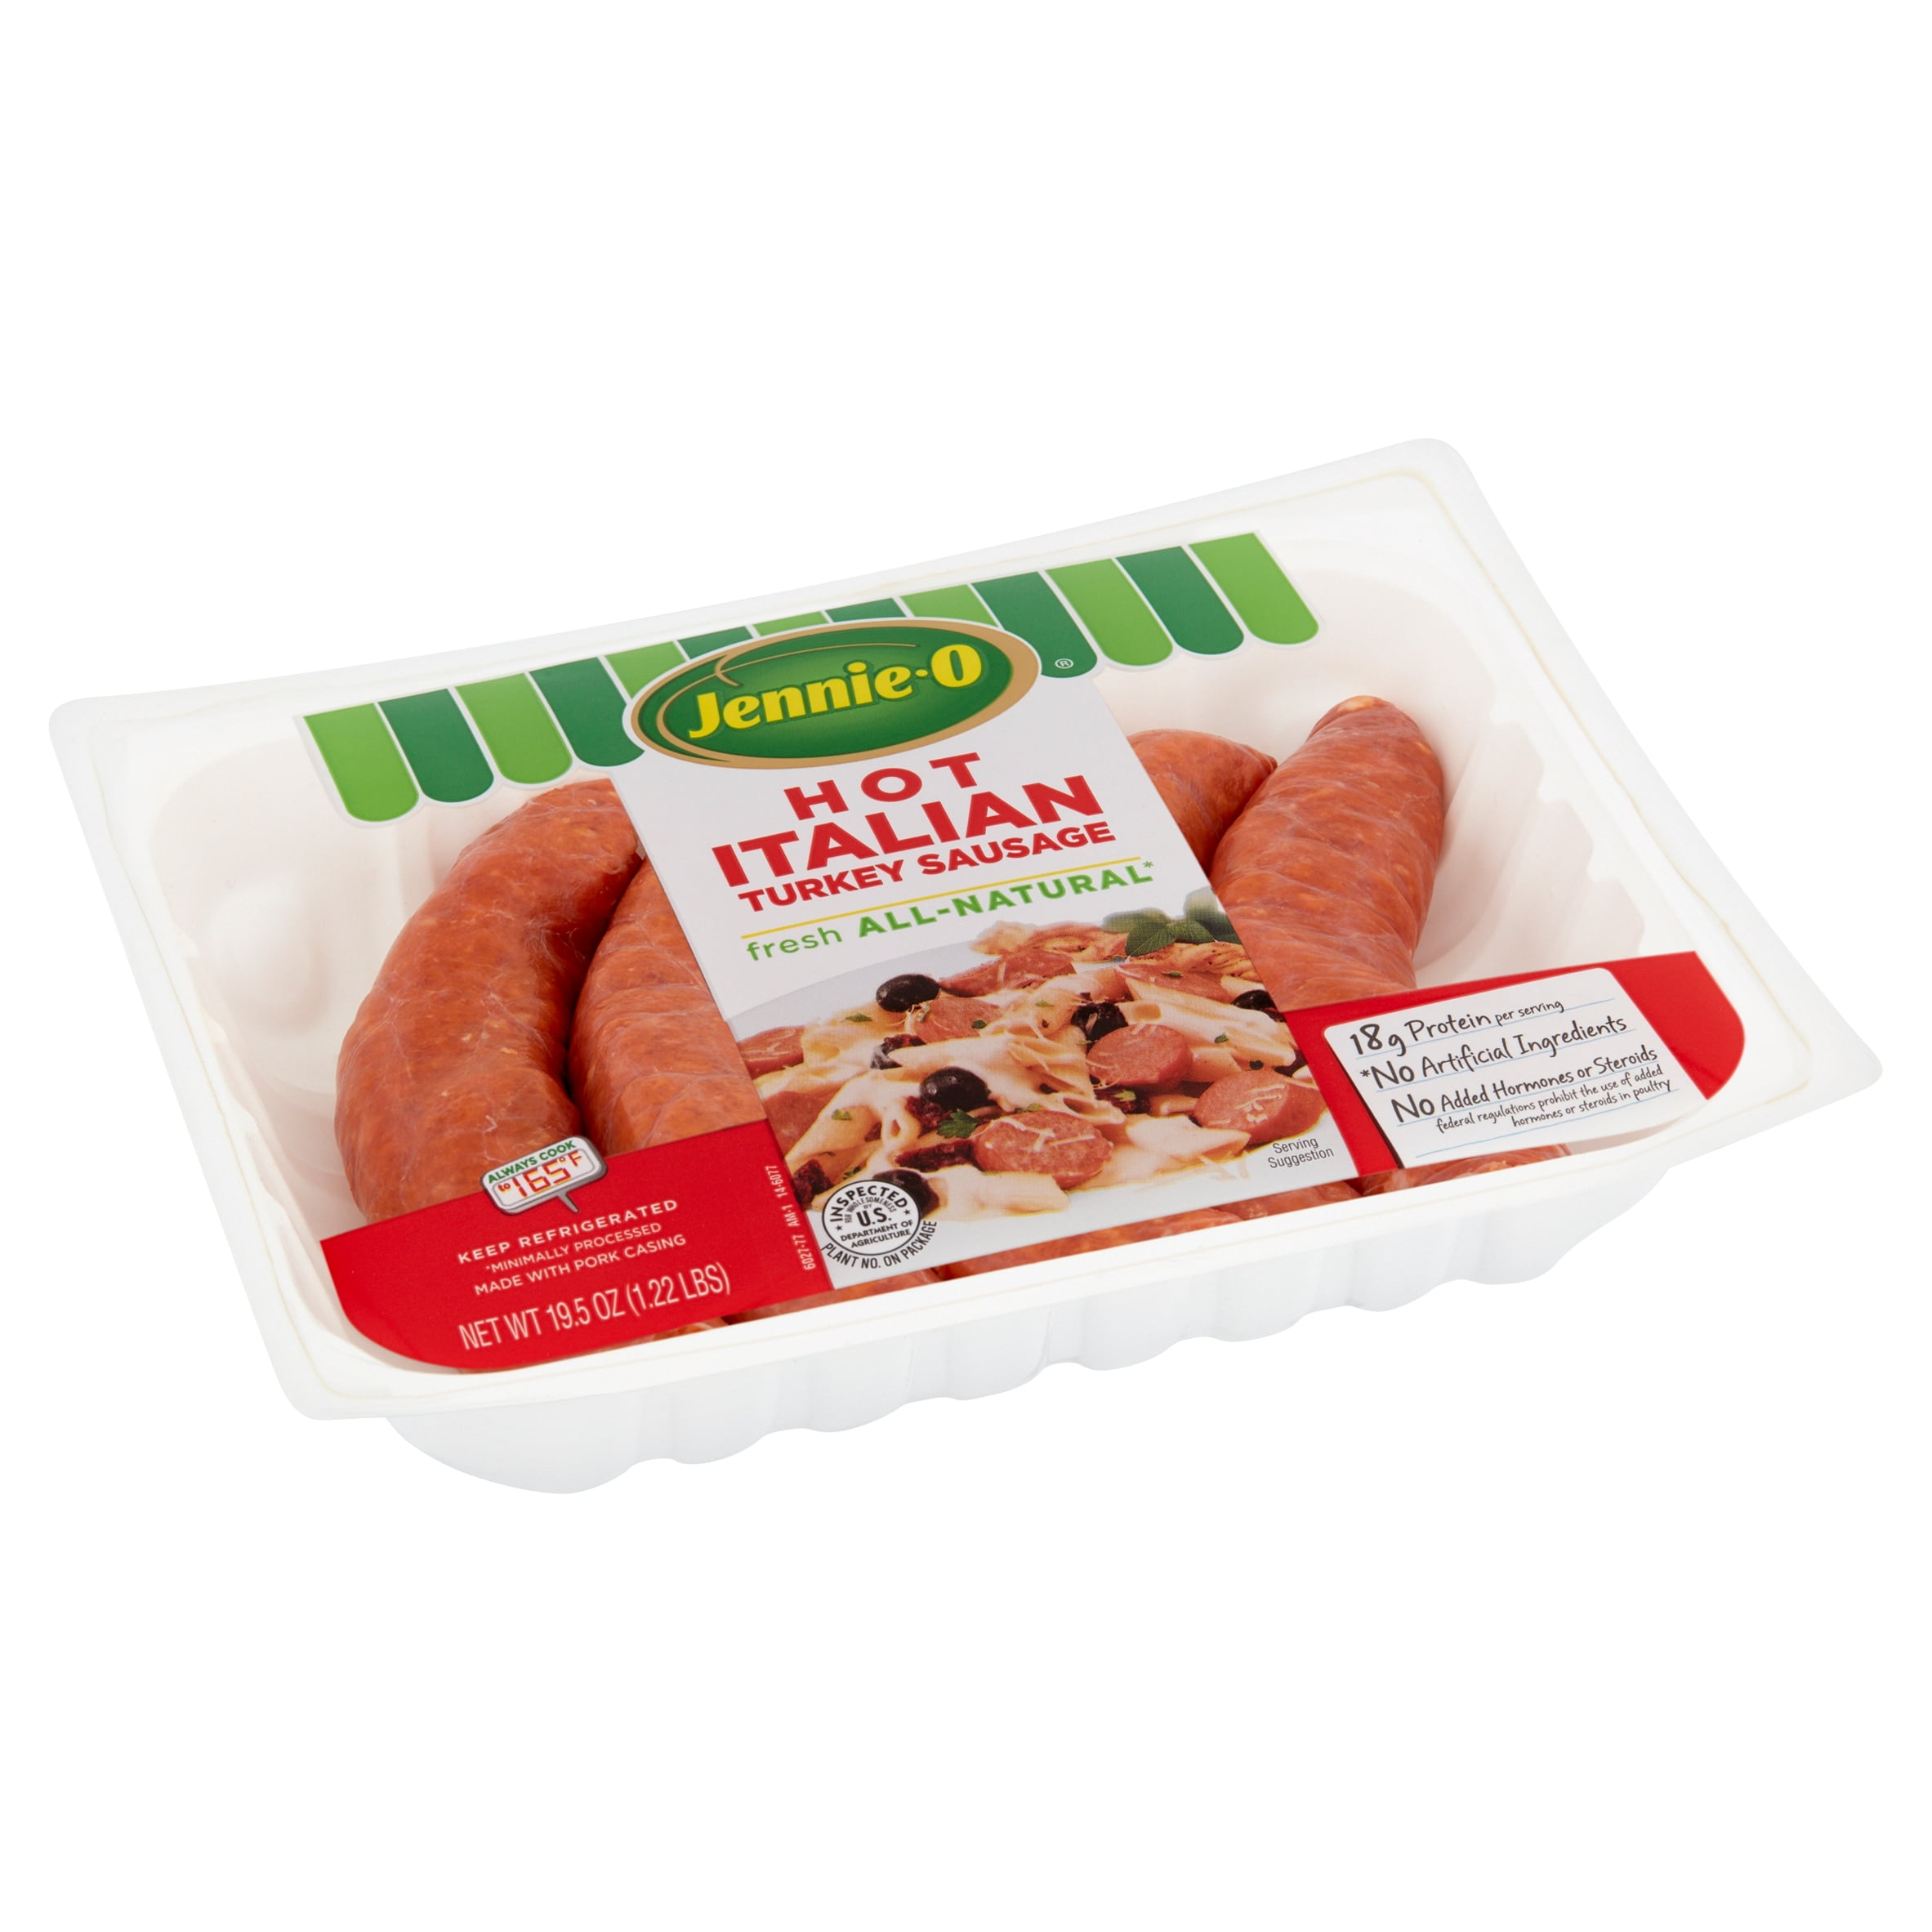 Lombardi's Mild Turkey Italian Sausage, 16 oz - Metro Market